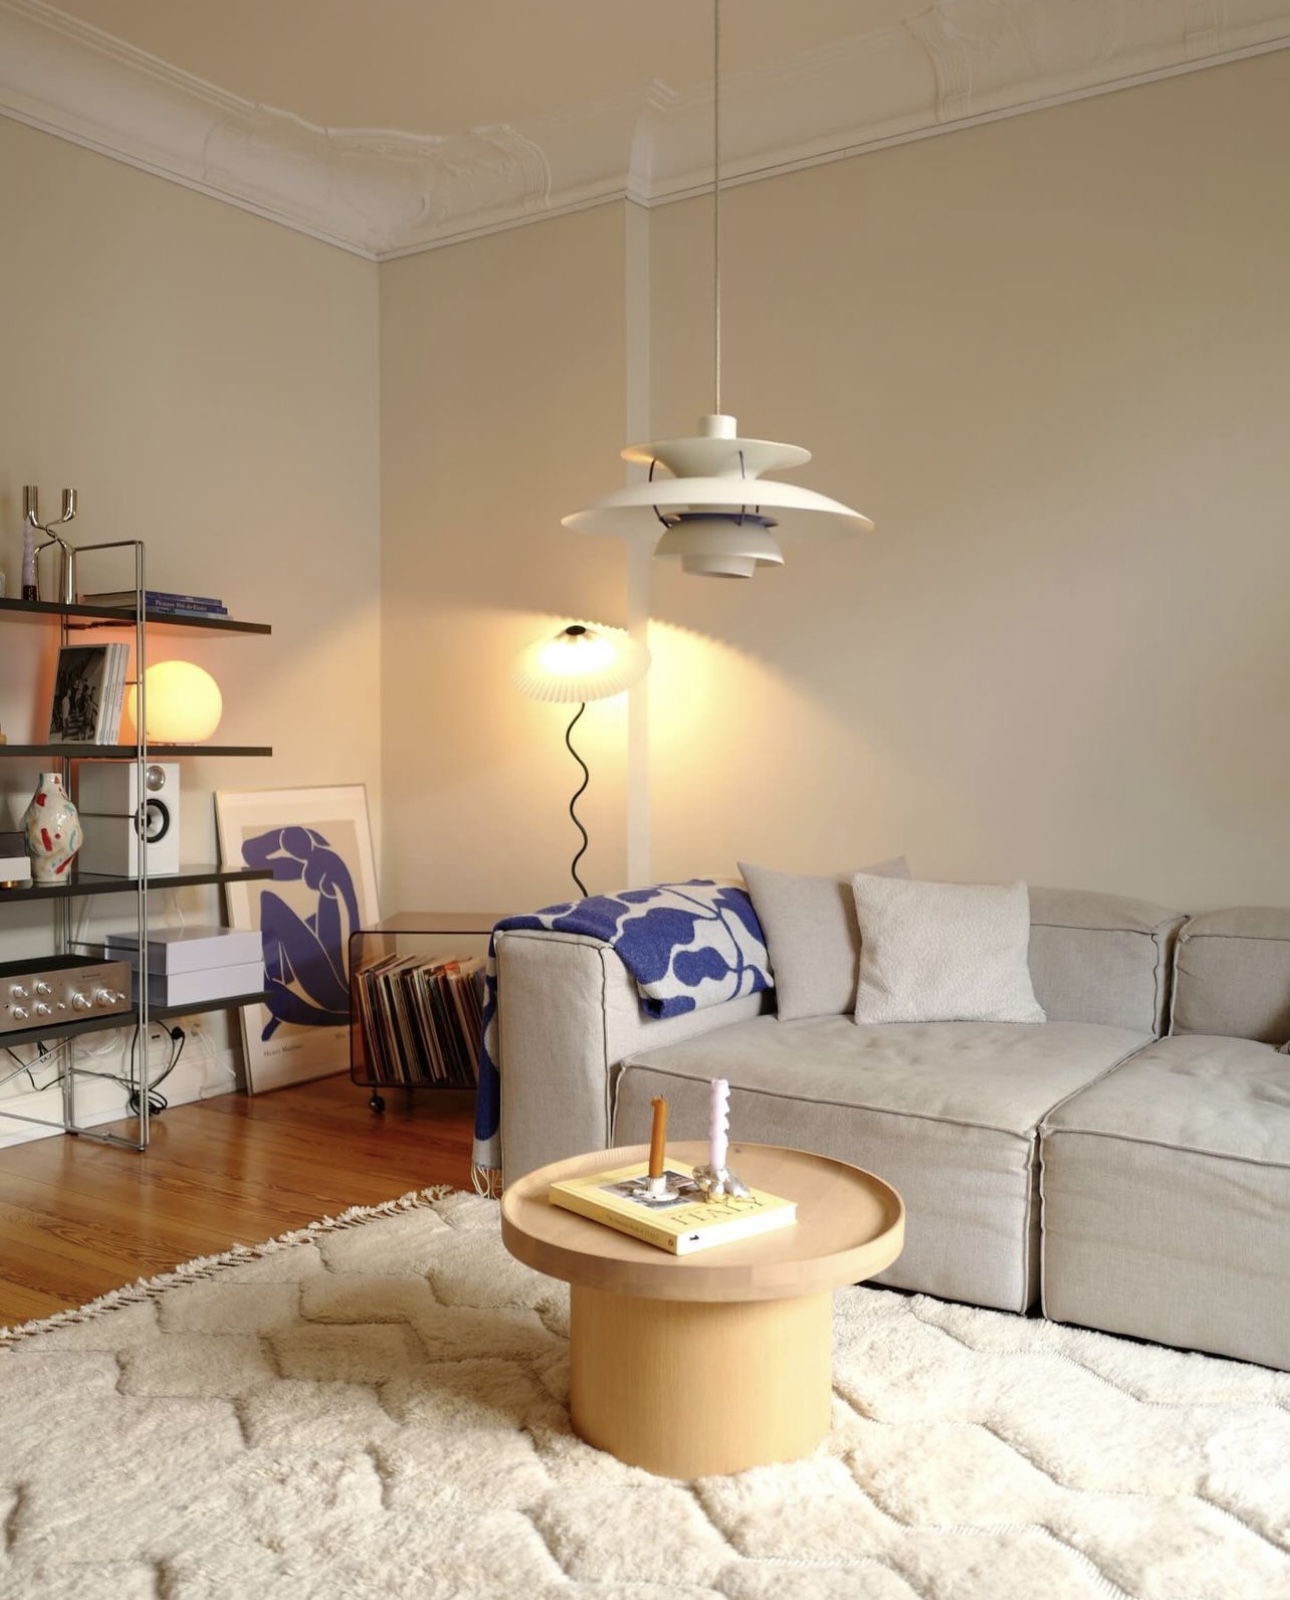 Scandinavian living room: white fluffy rug, grey sofa, retro IKEA shelf. Minimalistic, cozy ambiance with clean lines.